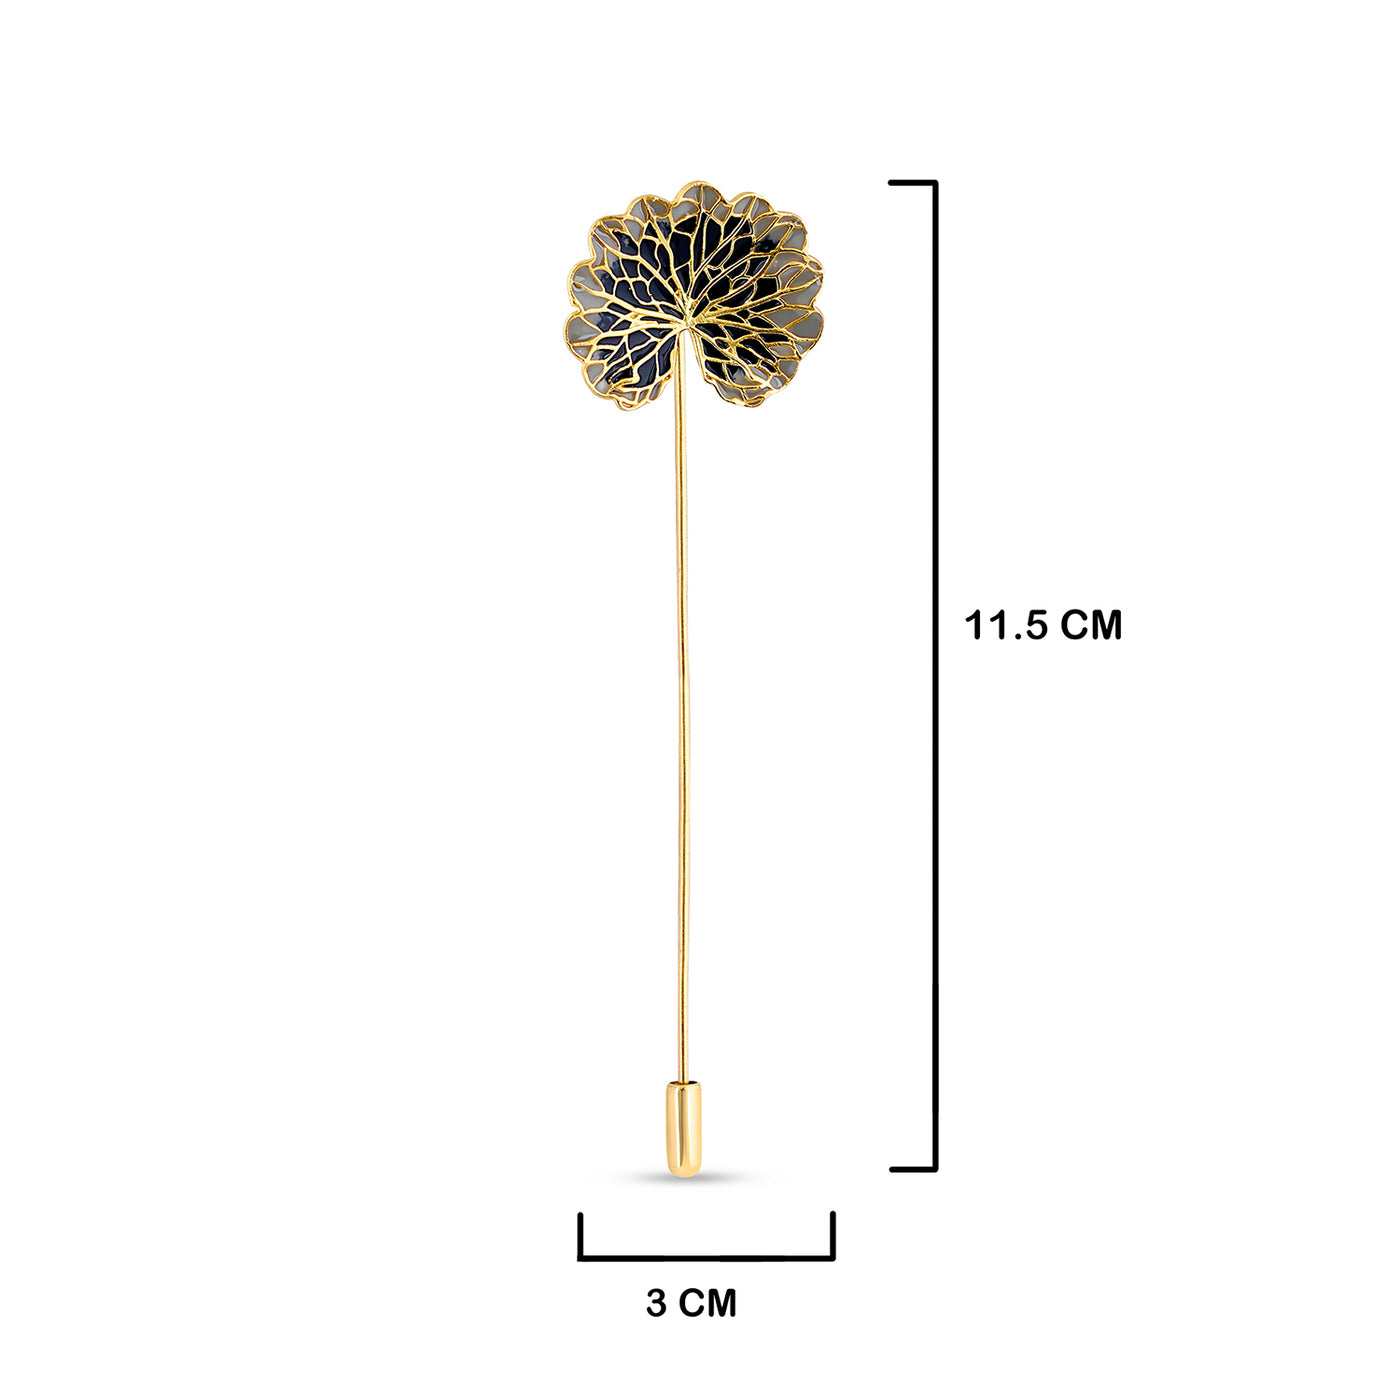 Kundan Leaf Brooch with measurements in cm. 11.5cm by 3cm.